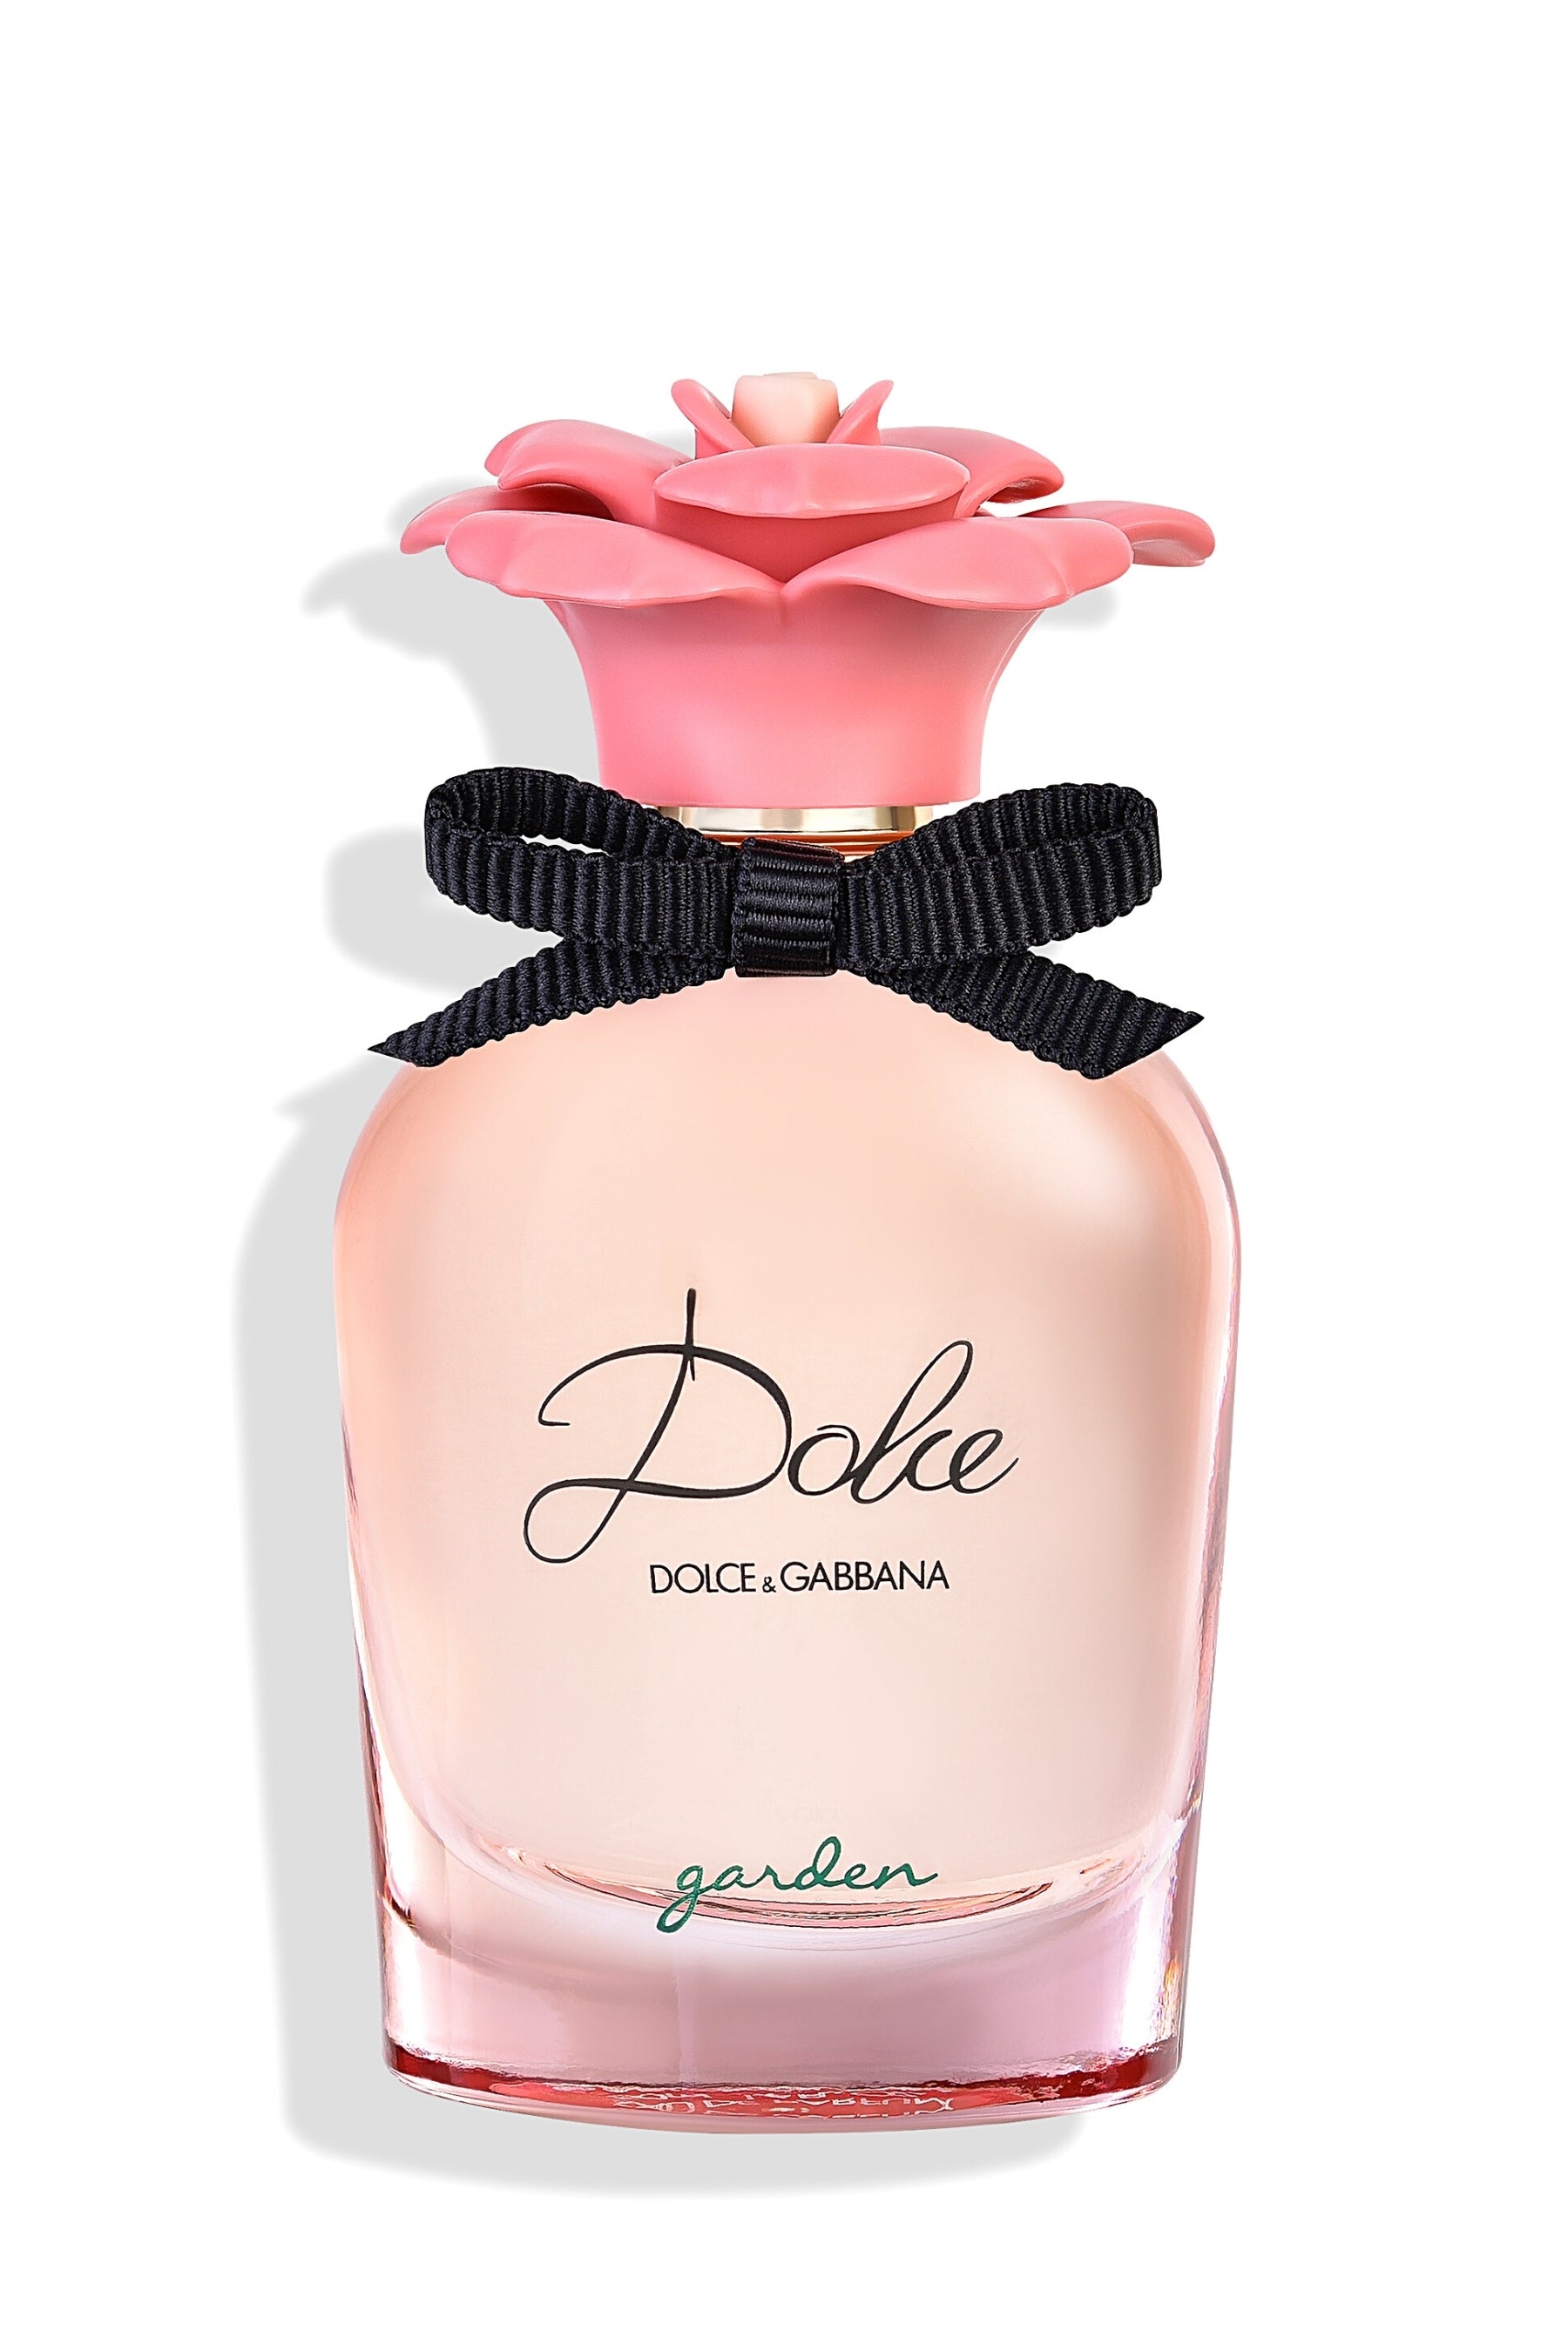 Dolce & Gabbana | Garden EDP - REBL